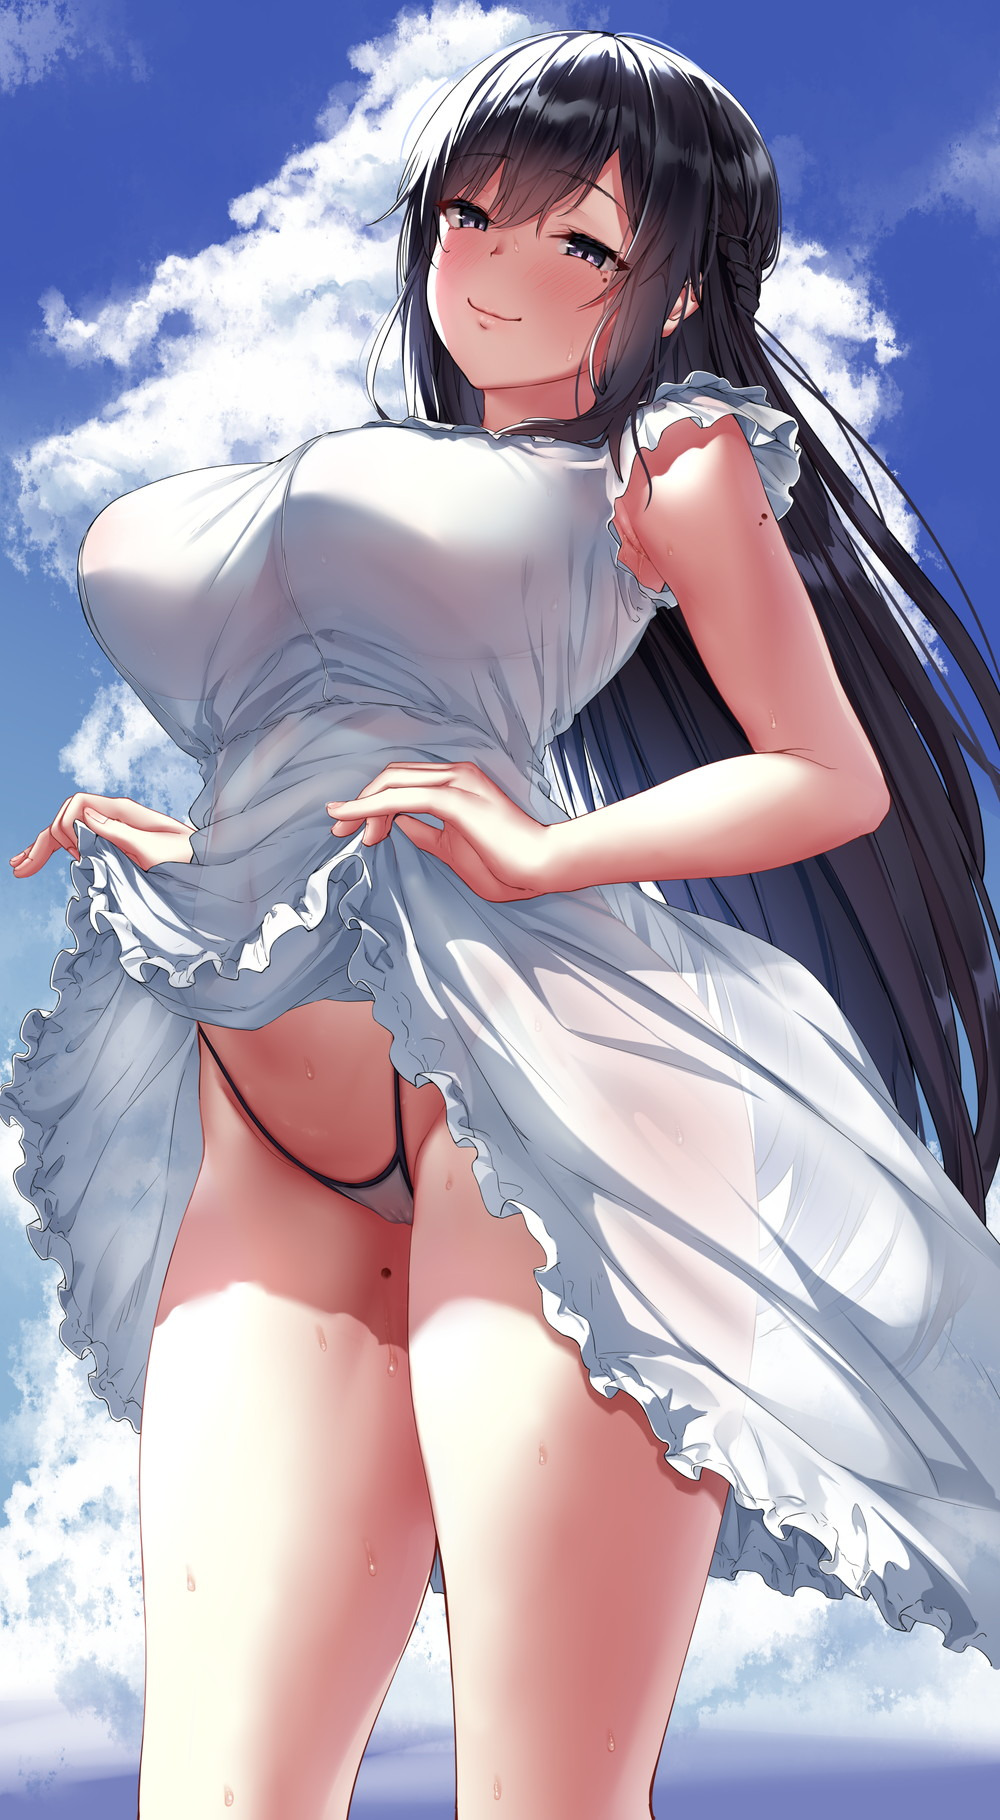 Anime 1000x1820 2D anime girls dark hair long hair dress white dress moles mole under eye lifting skirt clouds smiling thong portrait display big boobs artwork Jaku Denpa